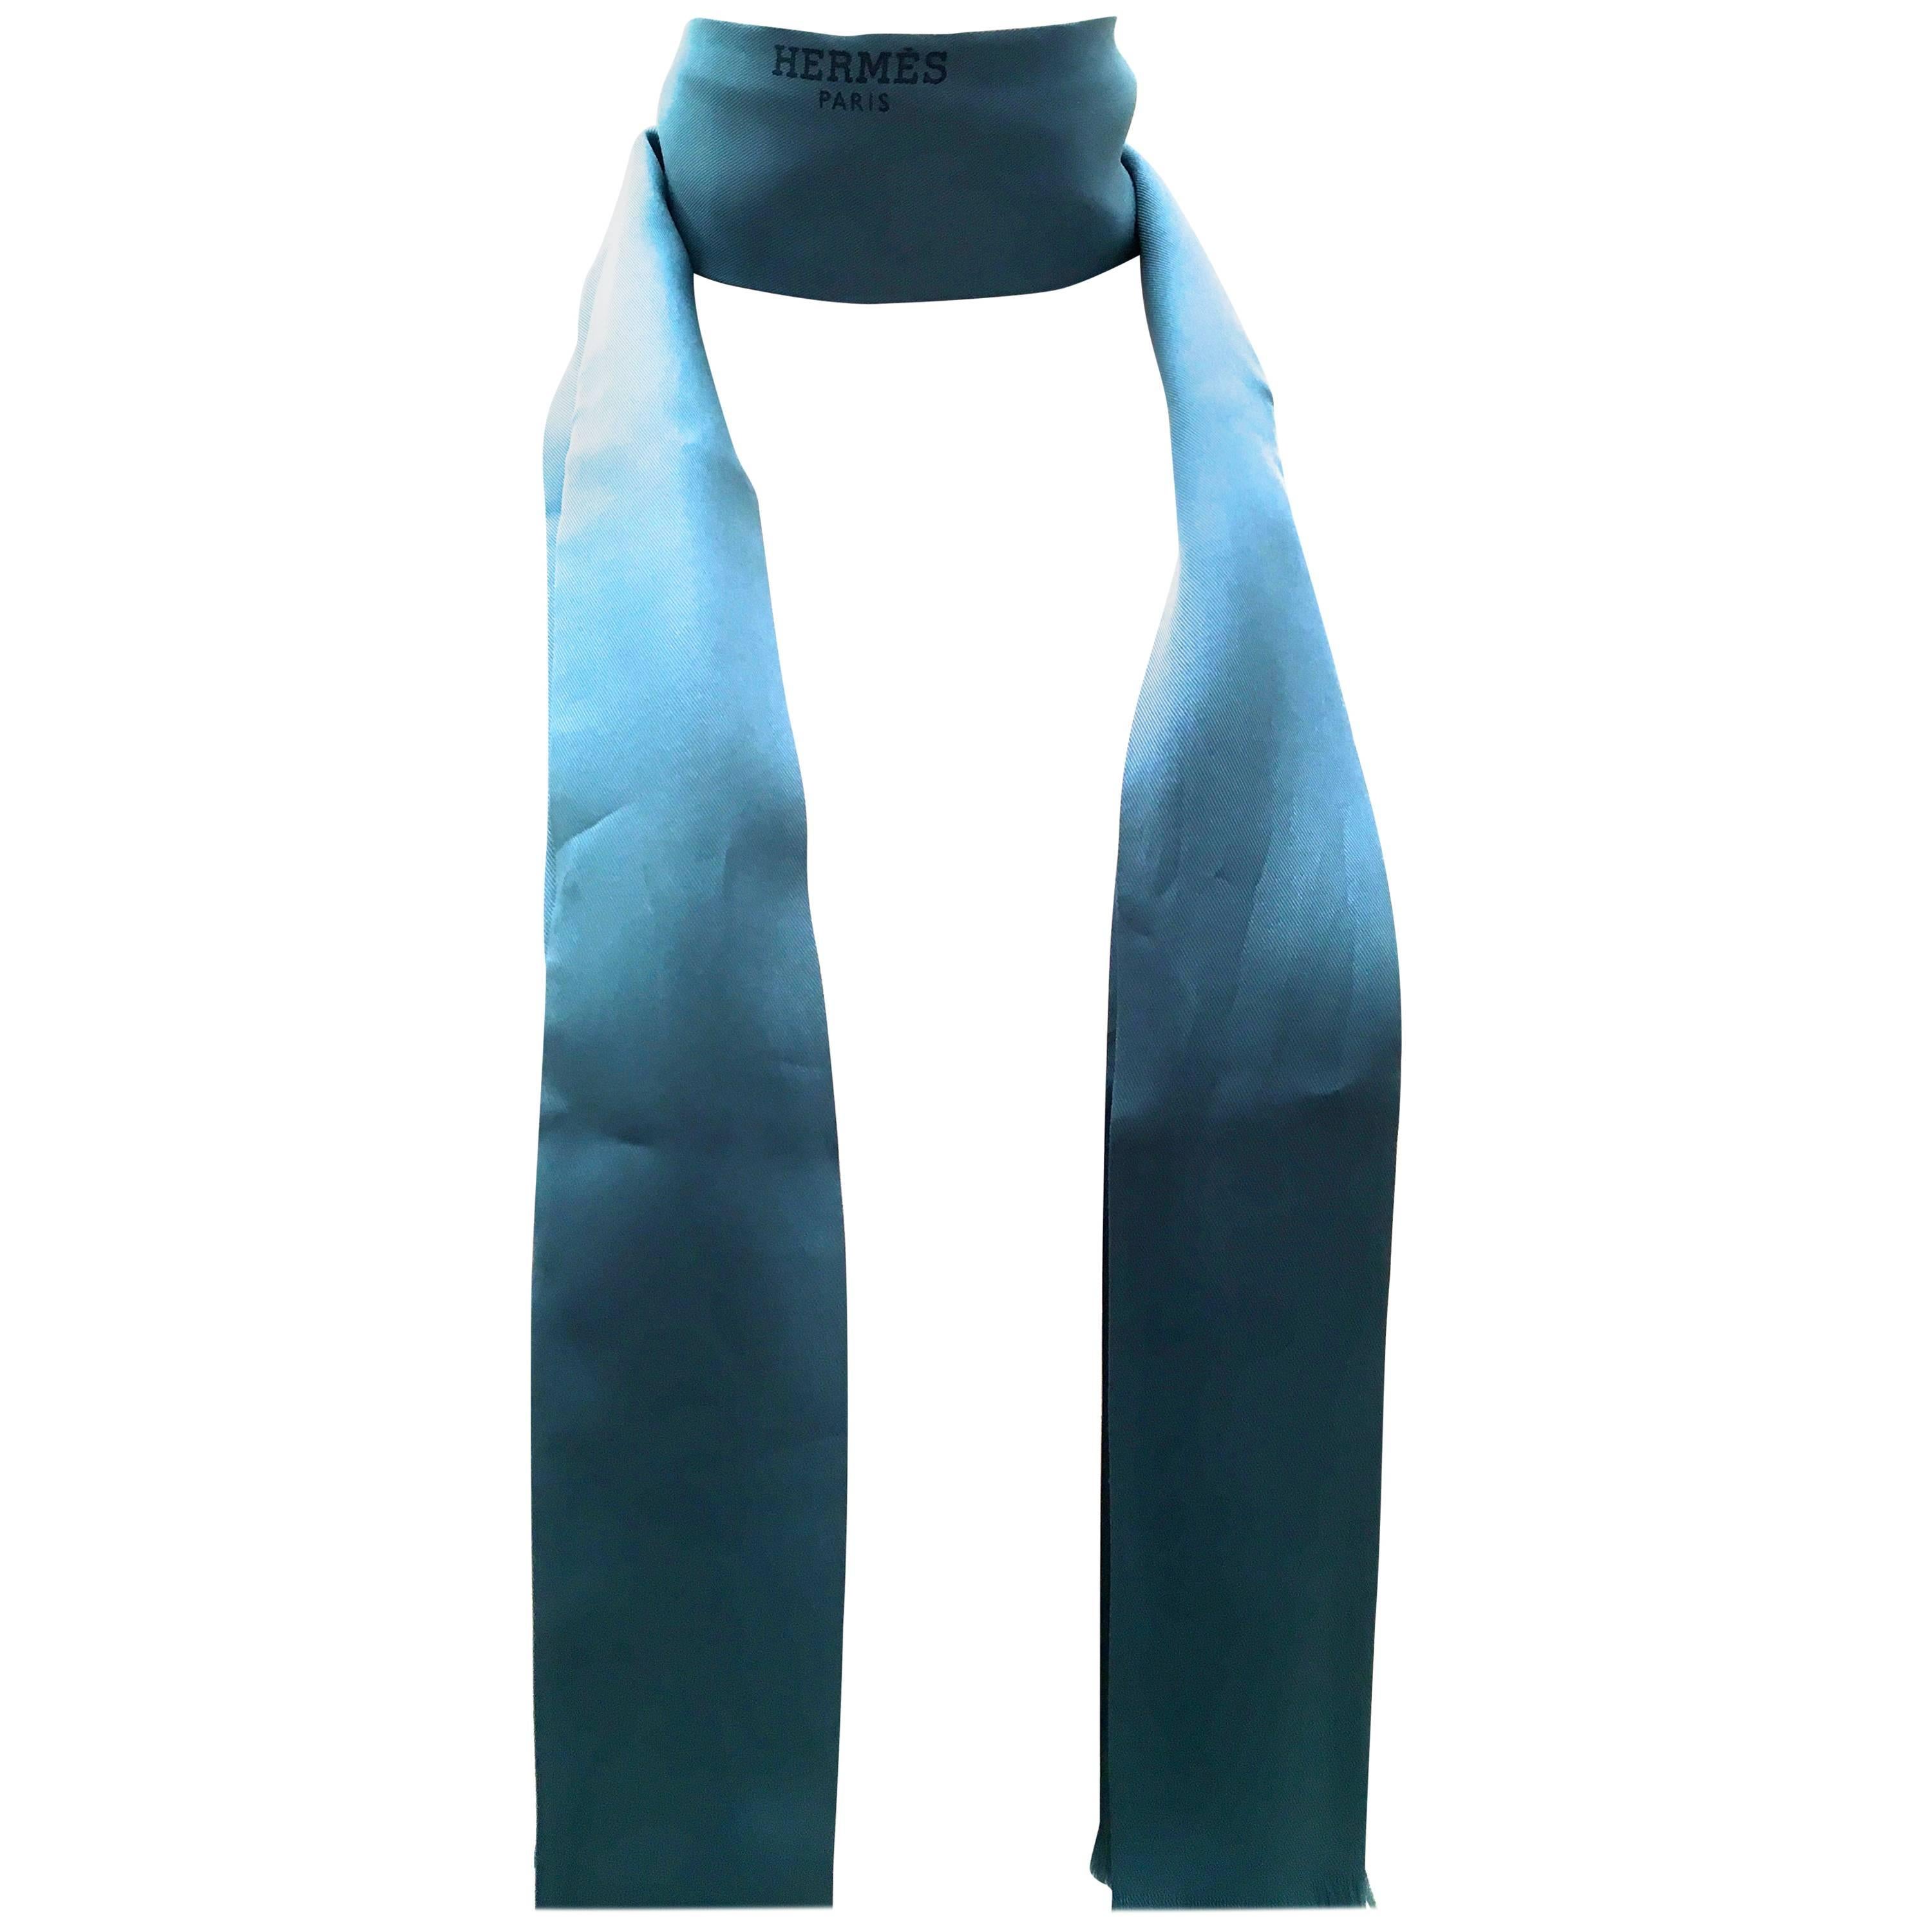 Rare Hermes Scarf / Tie / Belt - 100% Silk - New  For Sale